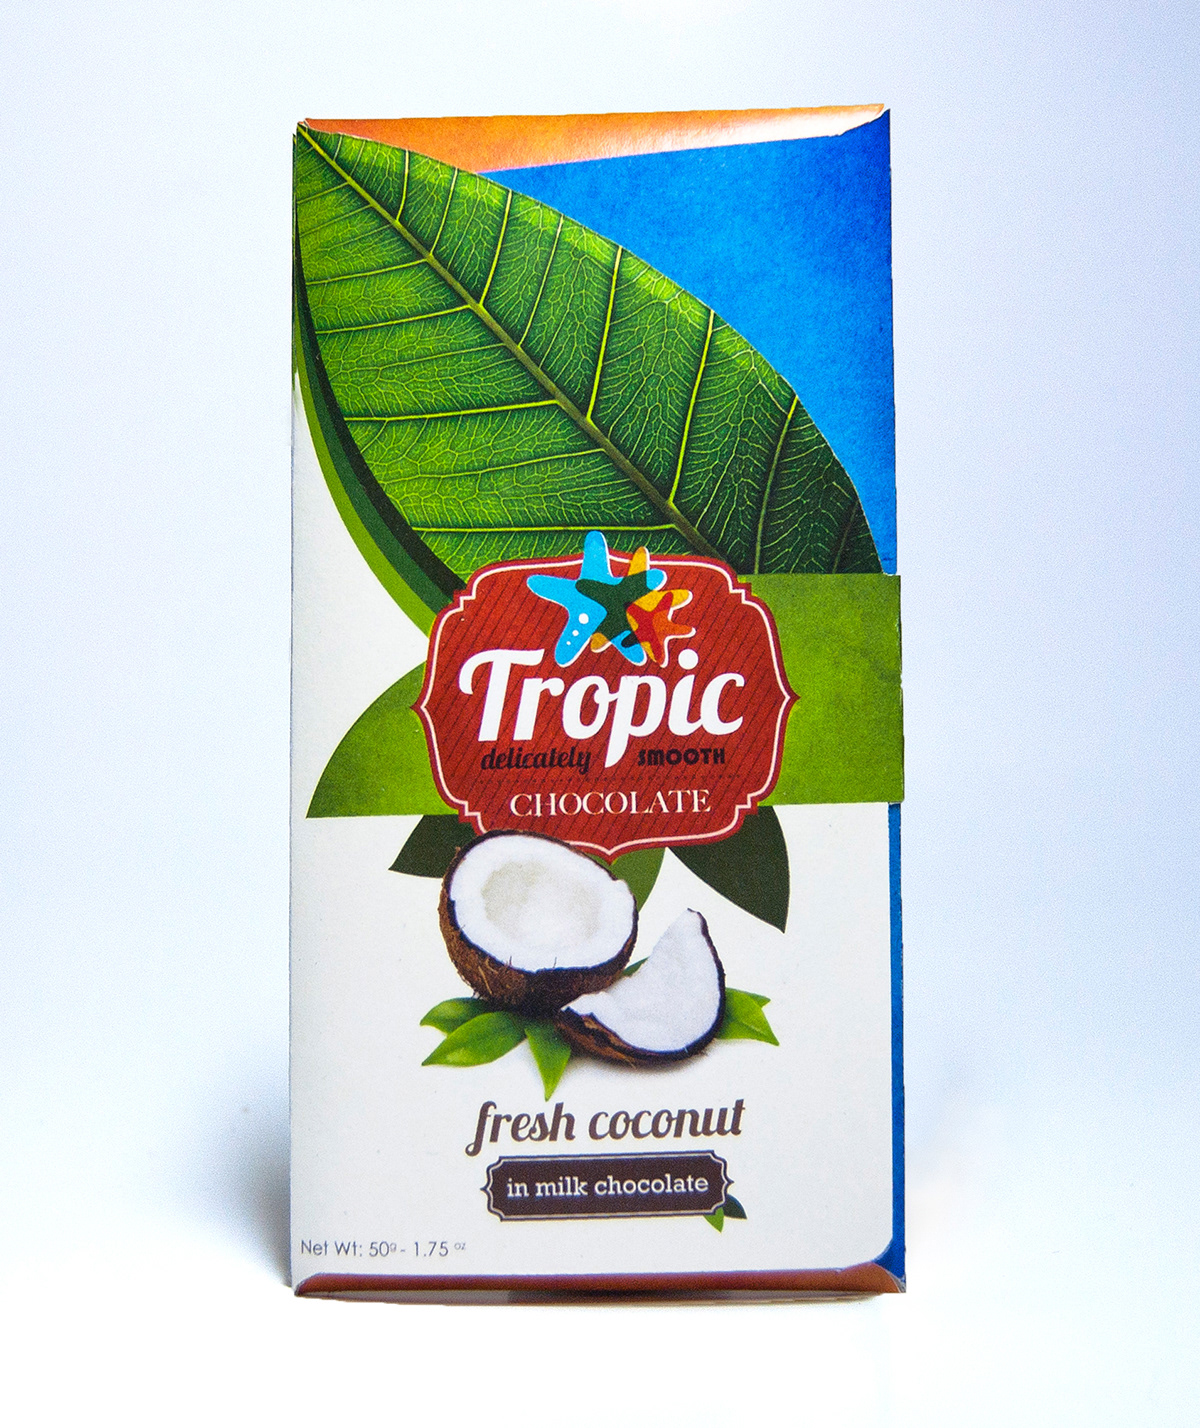 graphic  design  Packaging  chocolate  tropic  flavors  bright  sunny vector  illustrator  photoshop  student  arkansas